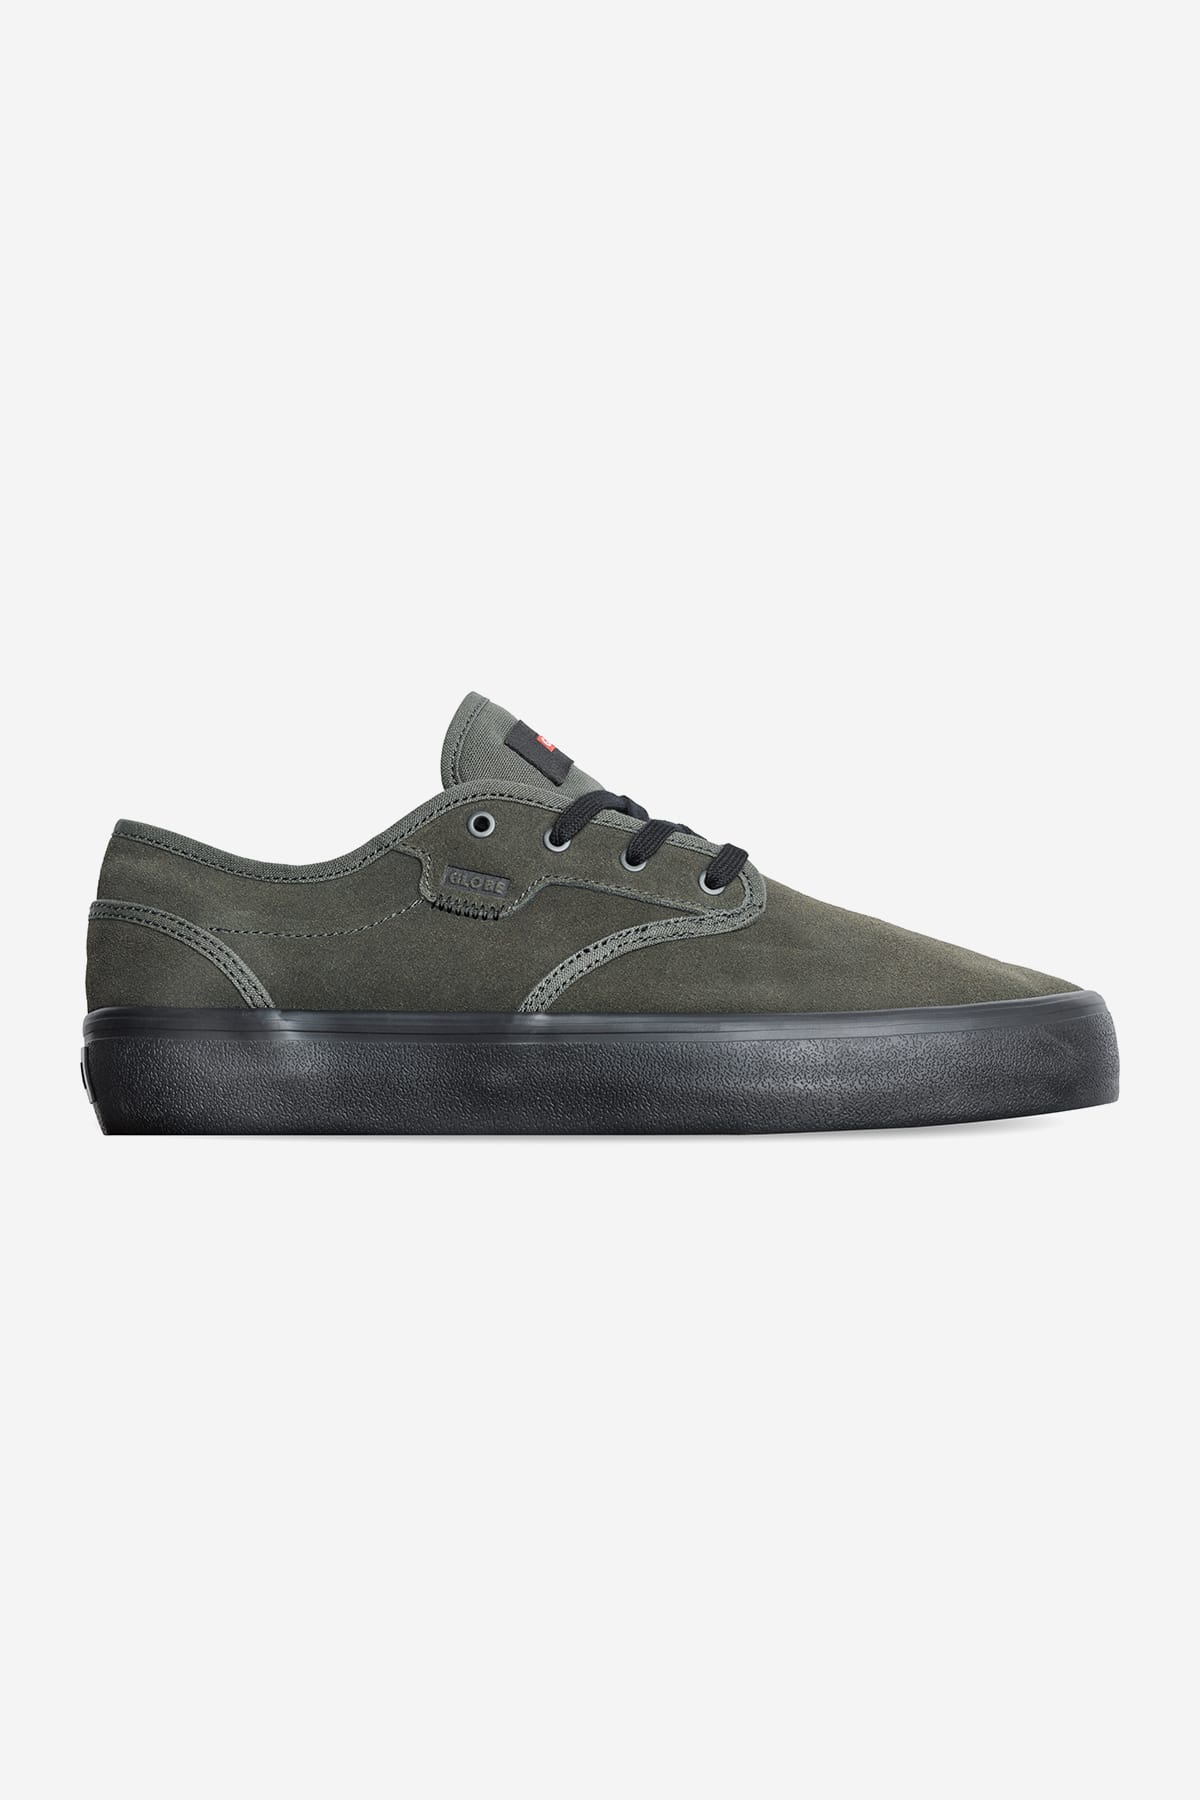 Globe - Motley Ii - Escuro Olive/Preto - skateboard Sapatos